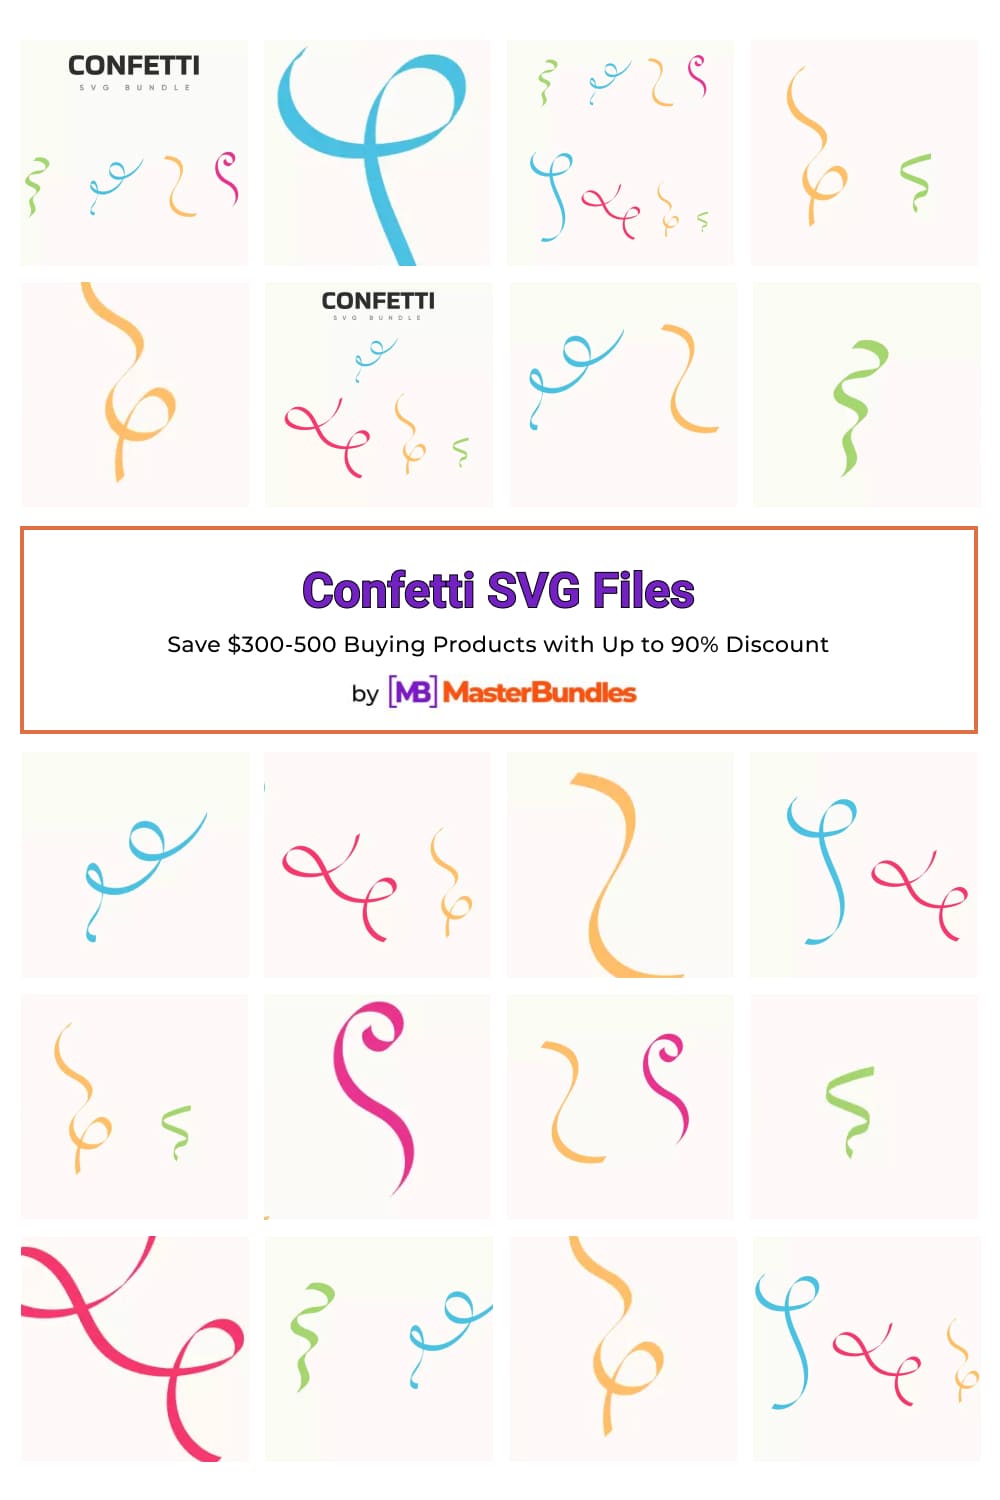 Confetti SVG Files for pinterest.